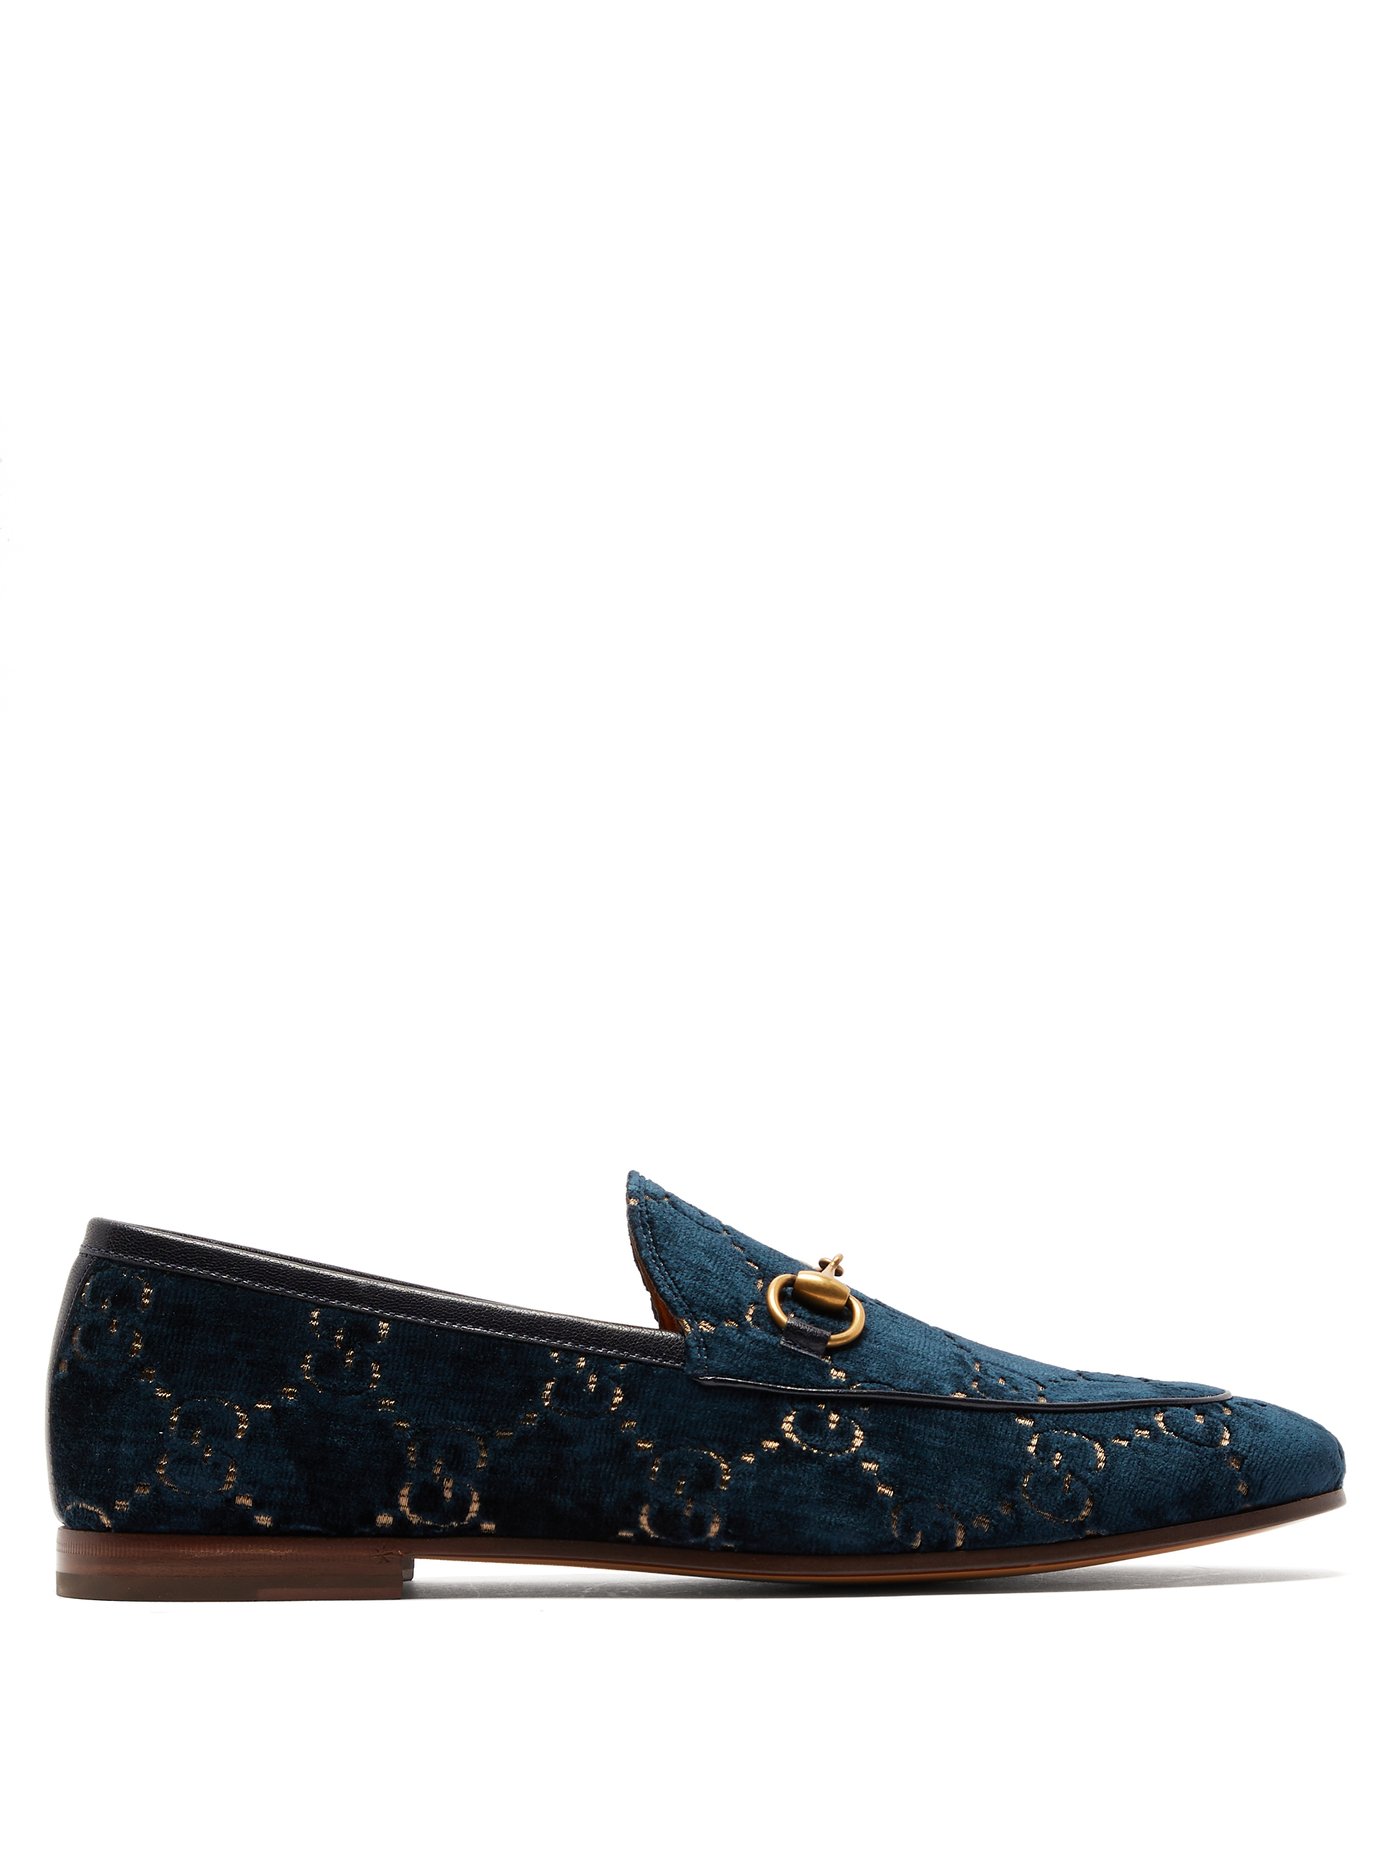 Jordaan GG velvet loafers | Gucci 